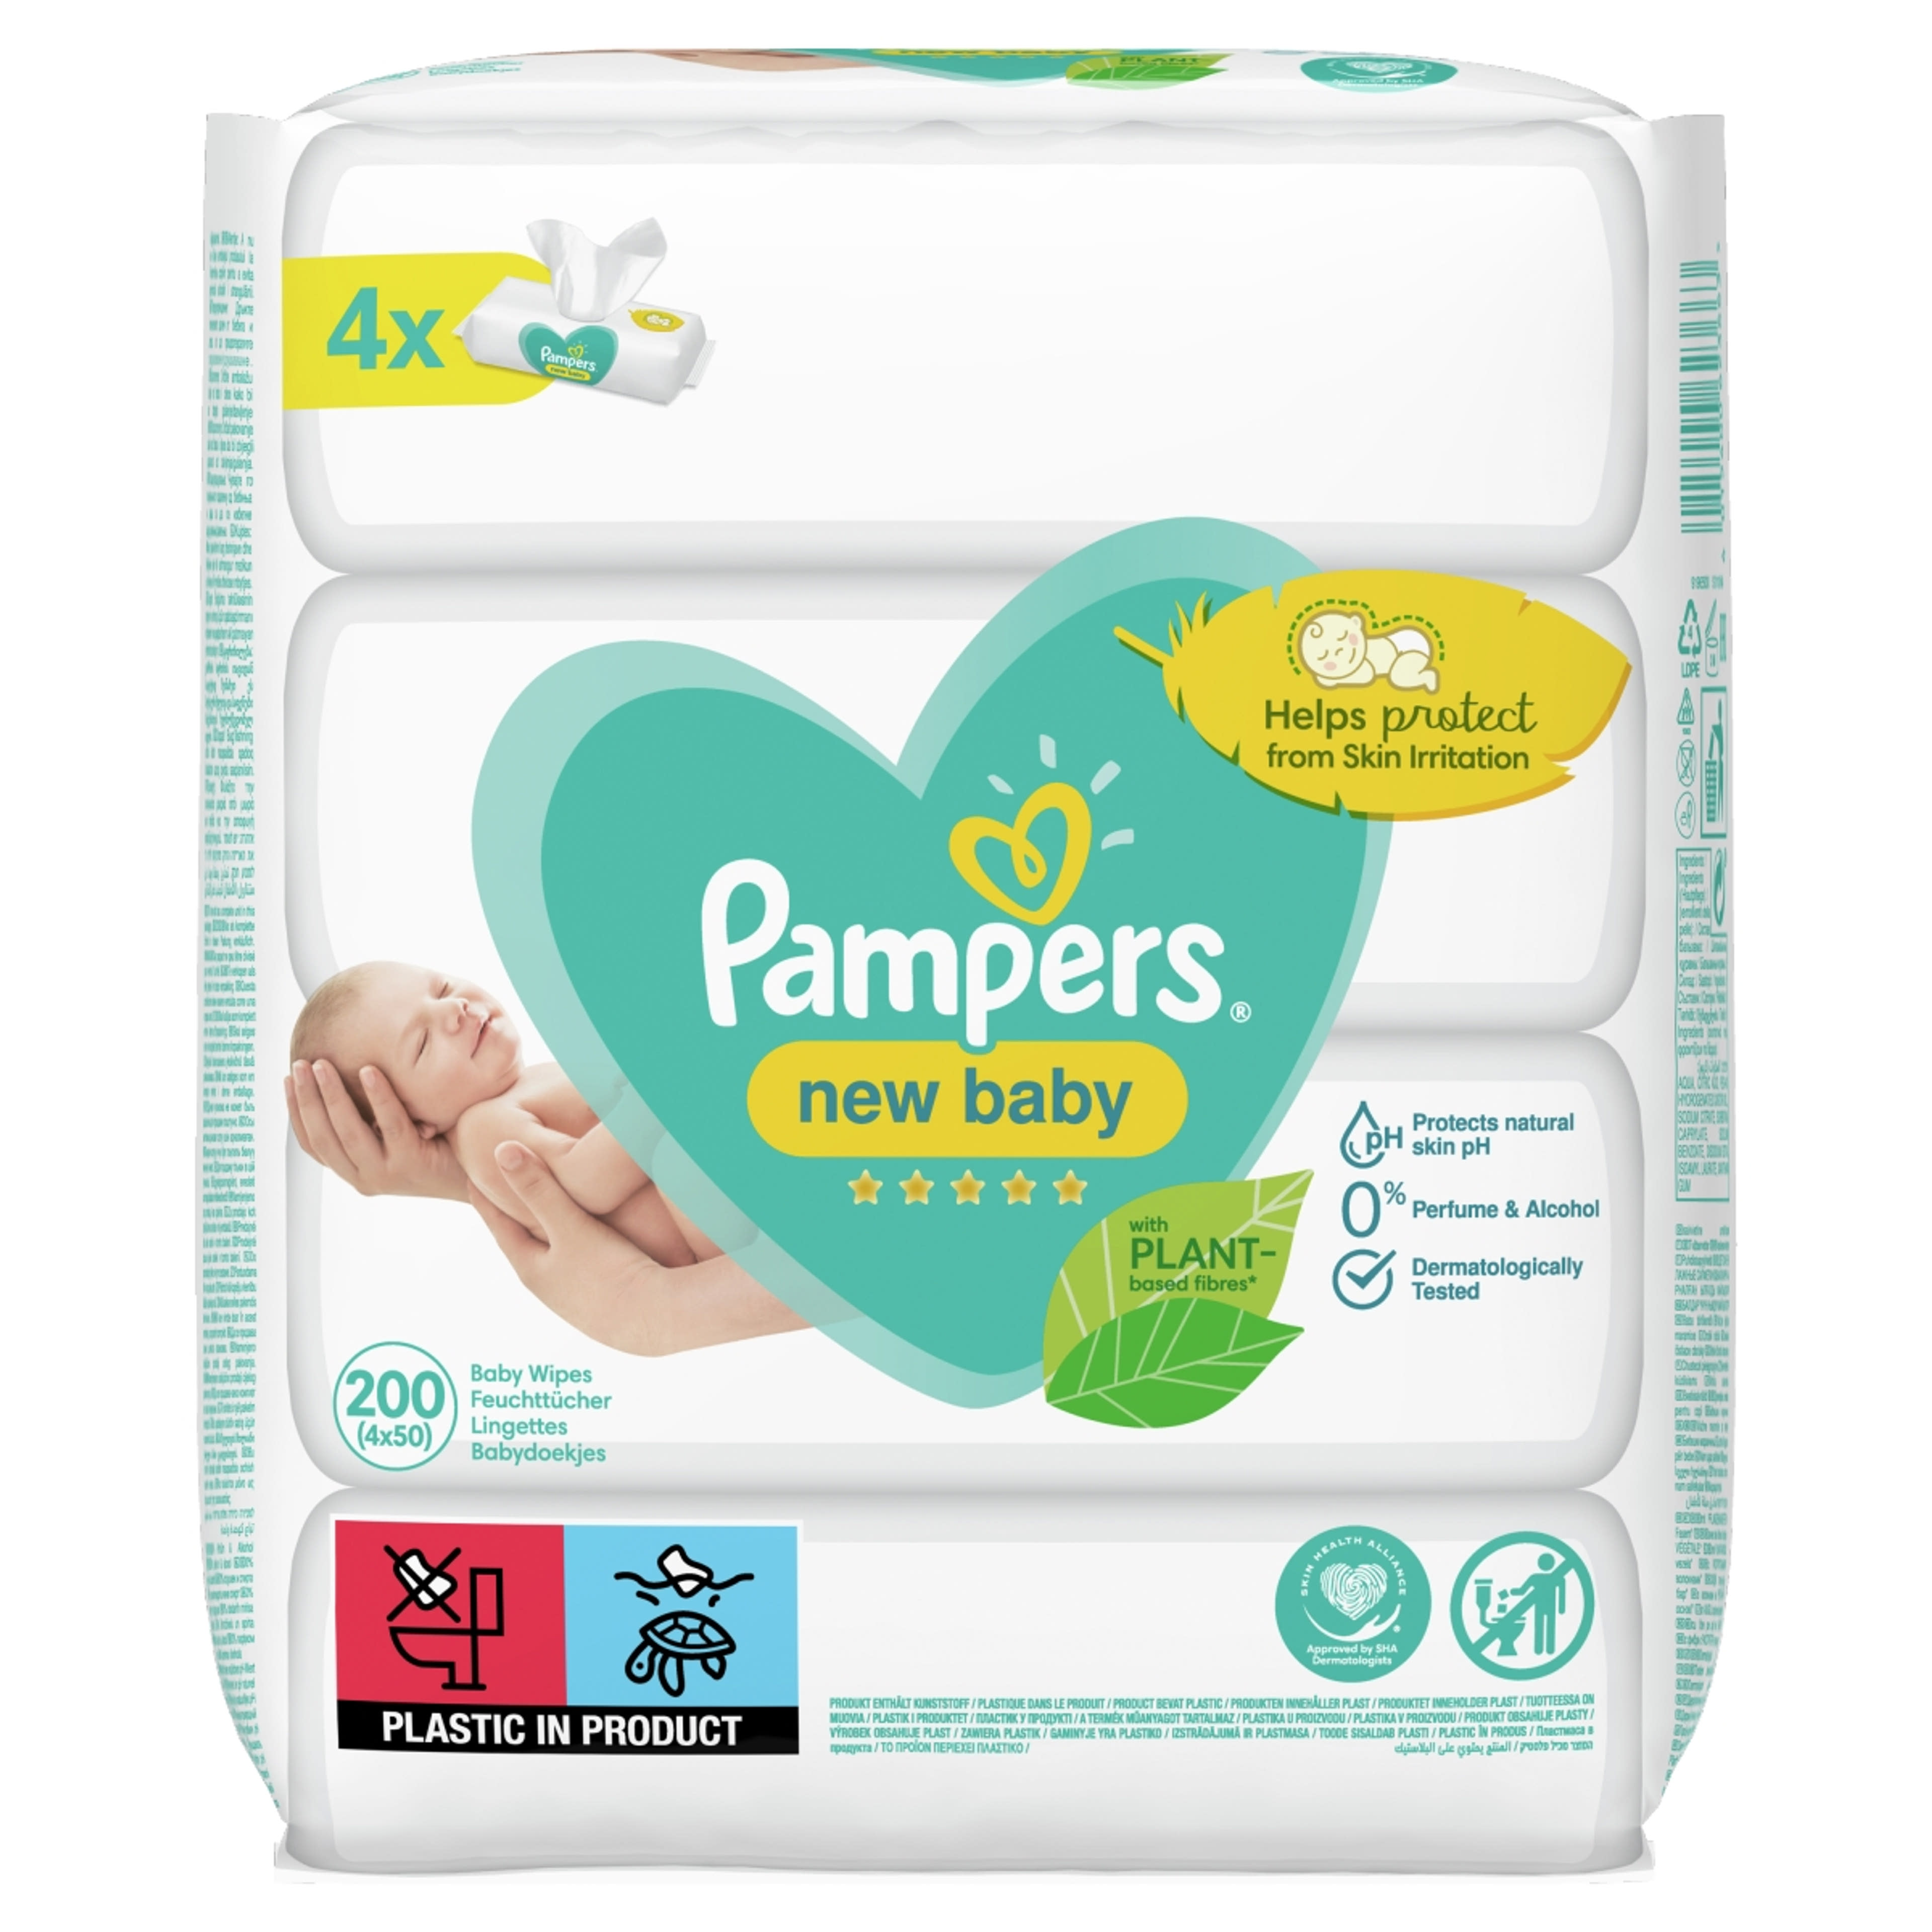 Pampers Sensitiv New Baby törlőkendő (4x50) - 200 db